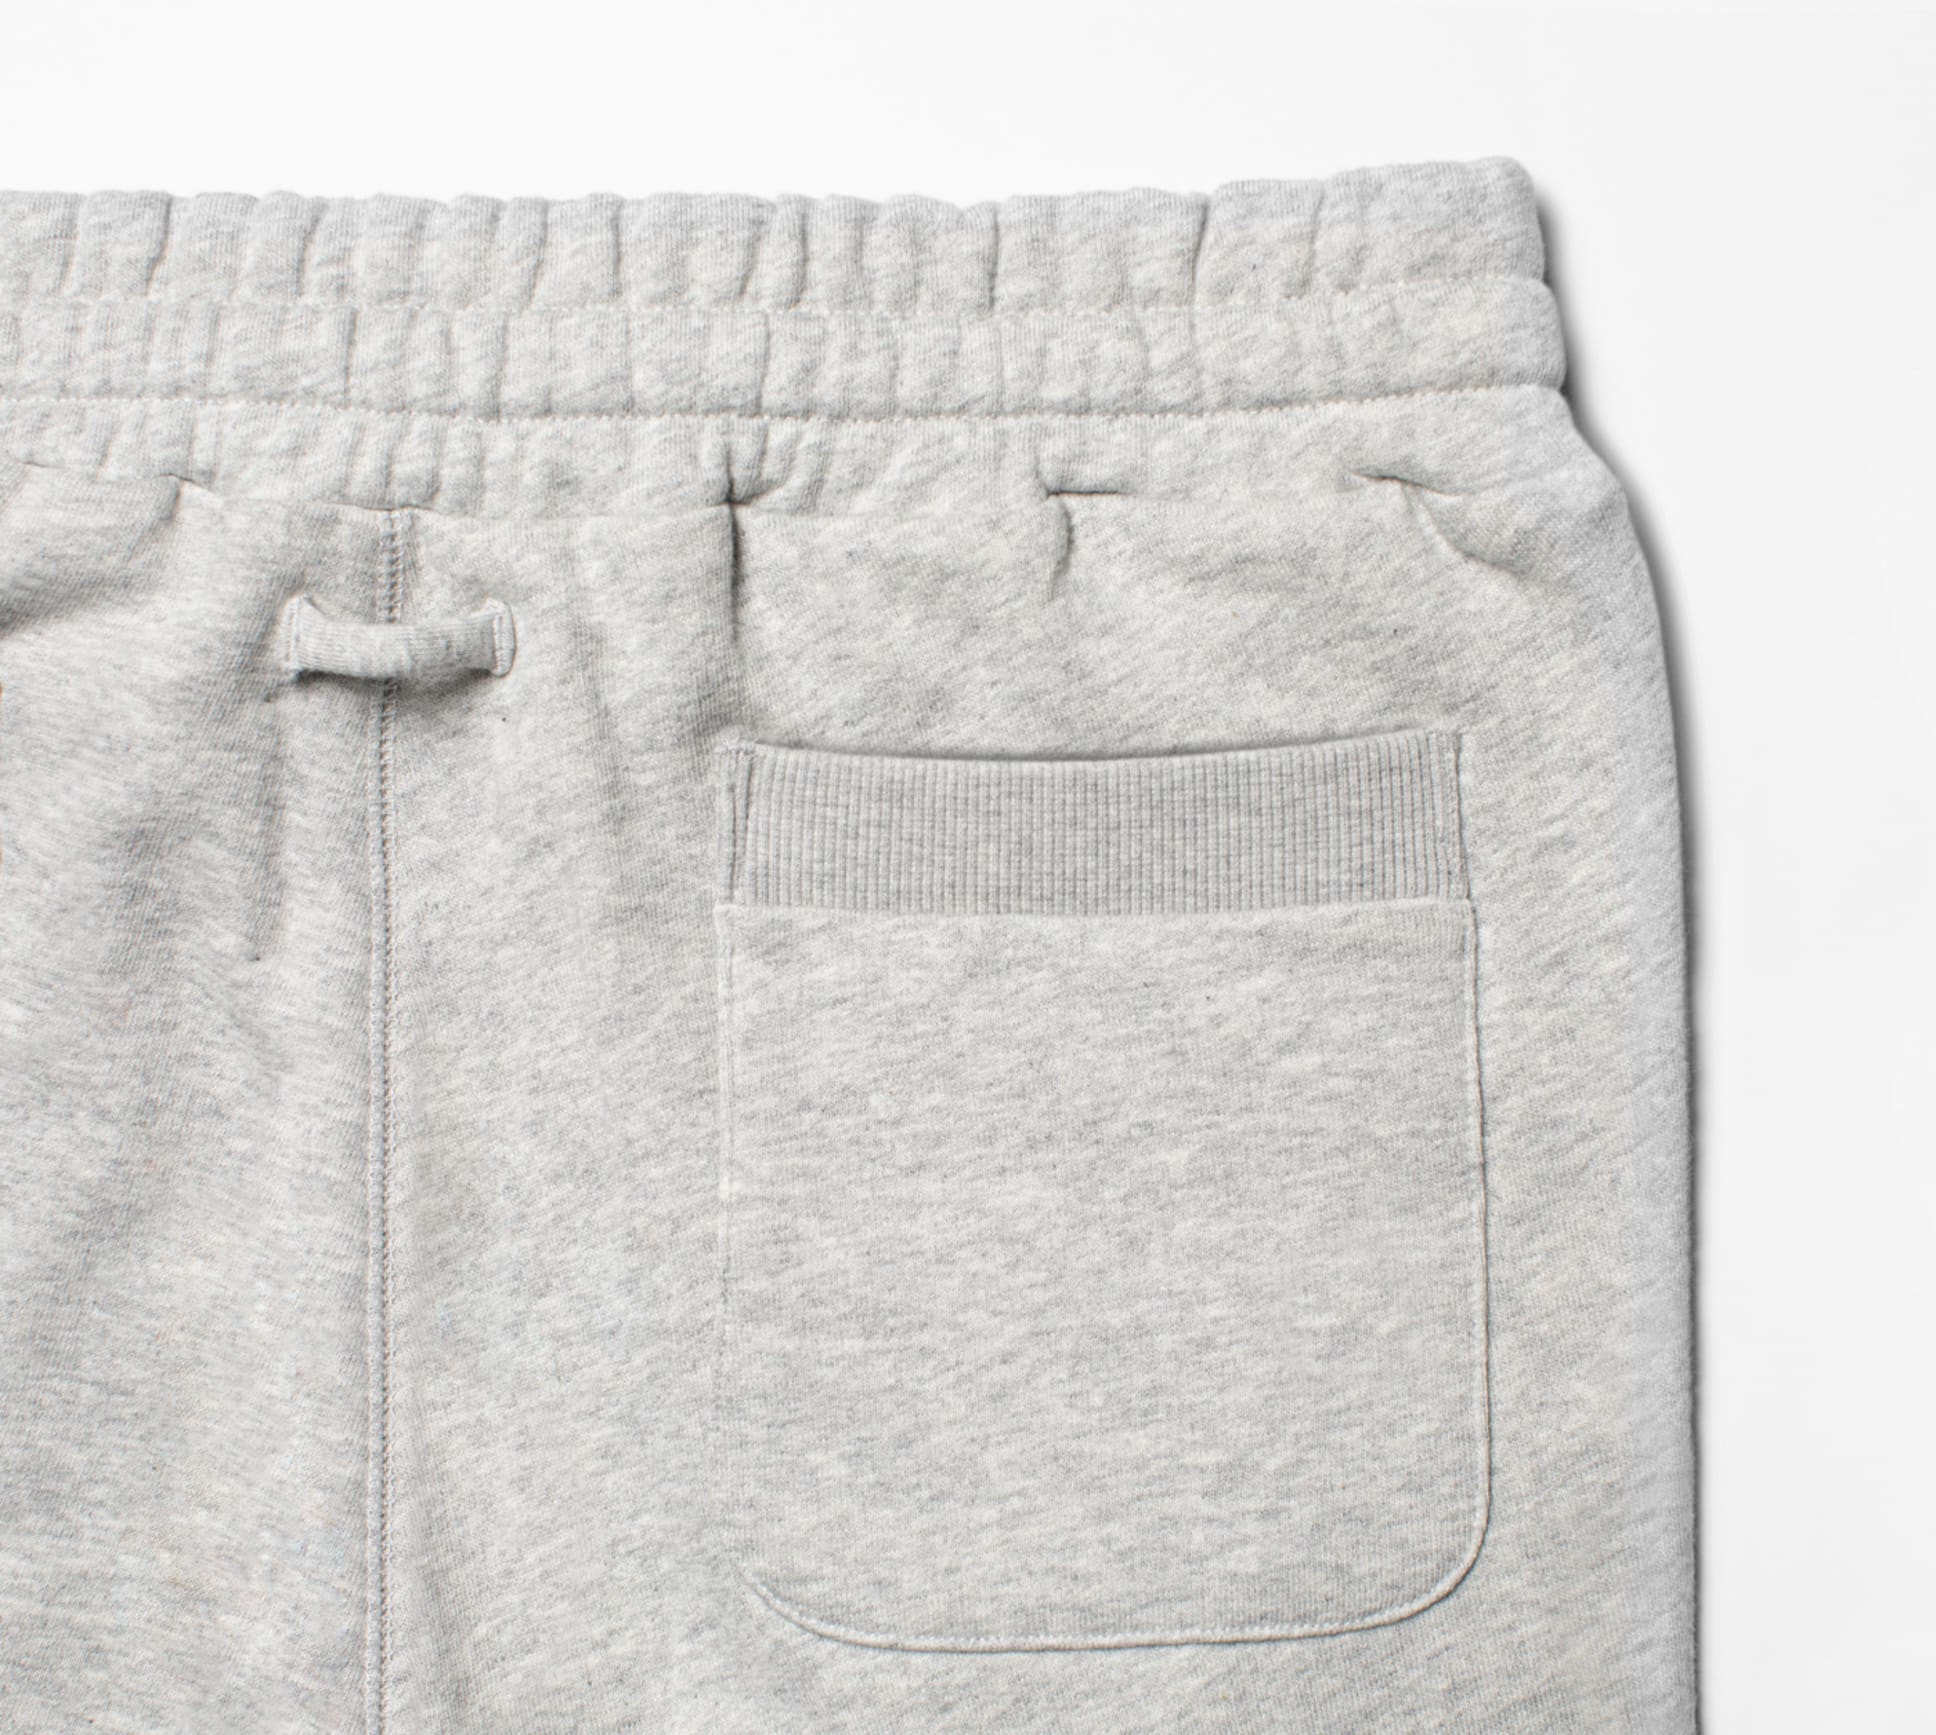 Lounge & Leisure Sweatpants (M's Grey) - Back Pocket Detail